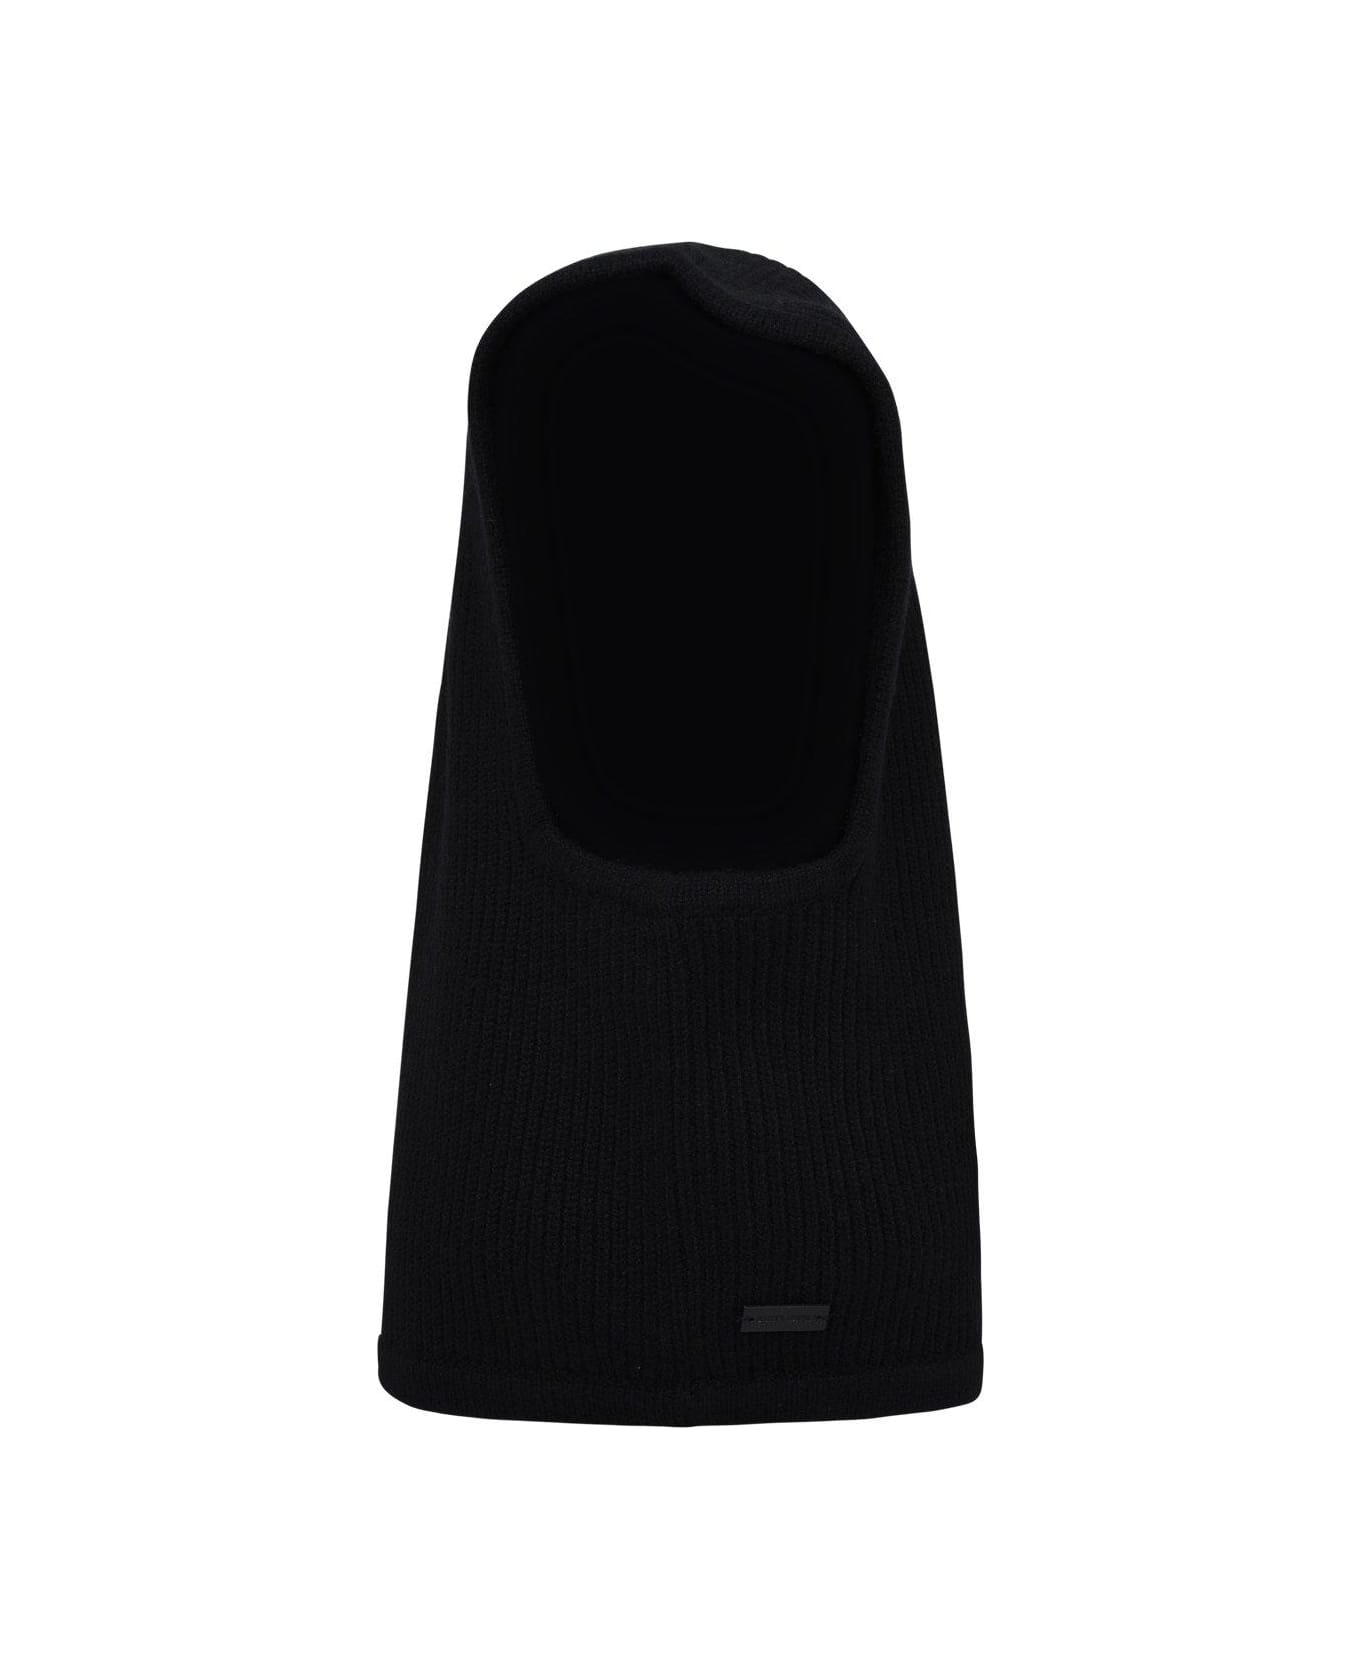 Saint Laurent Ribbed Balaclava - BLACK 帽子